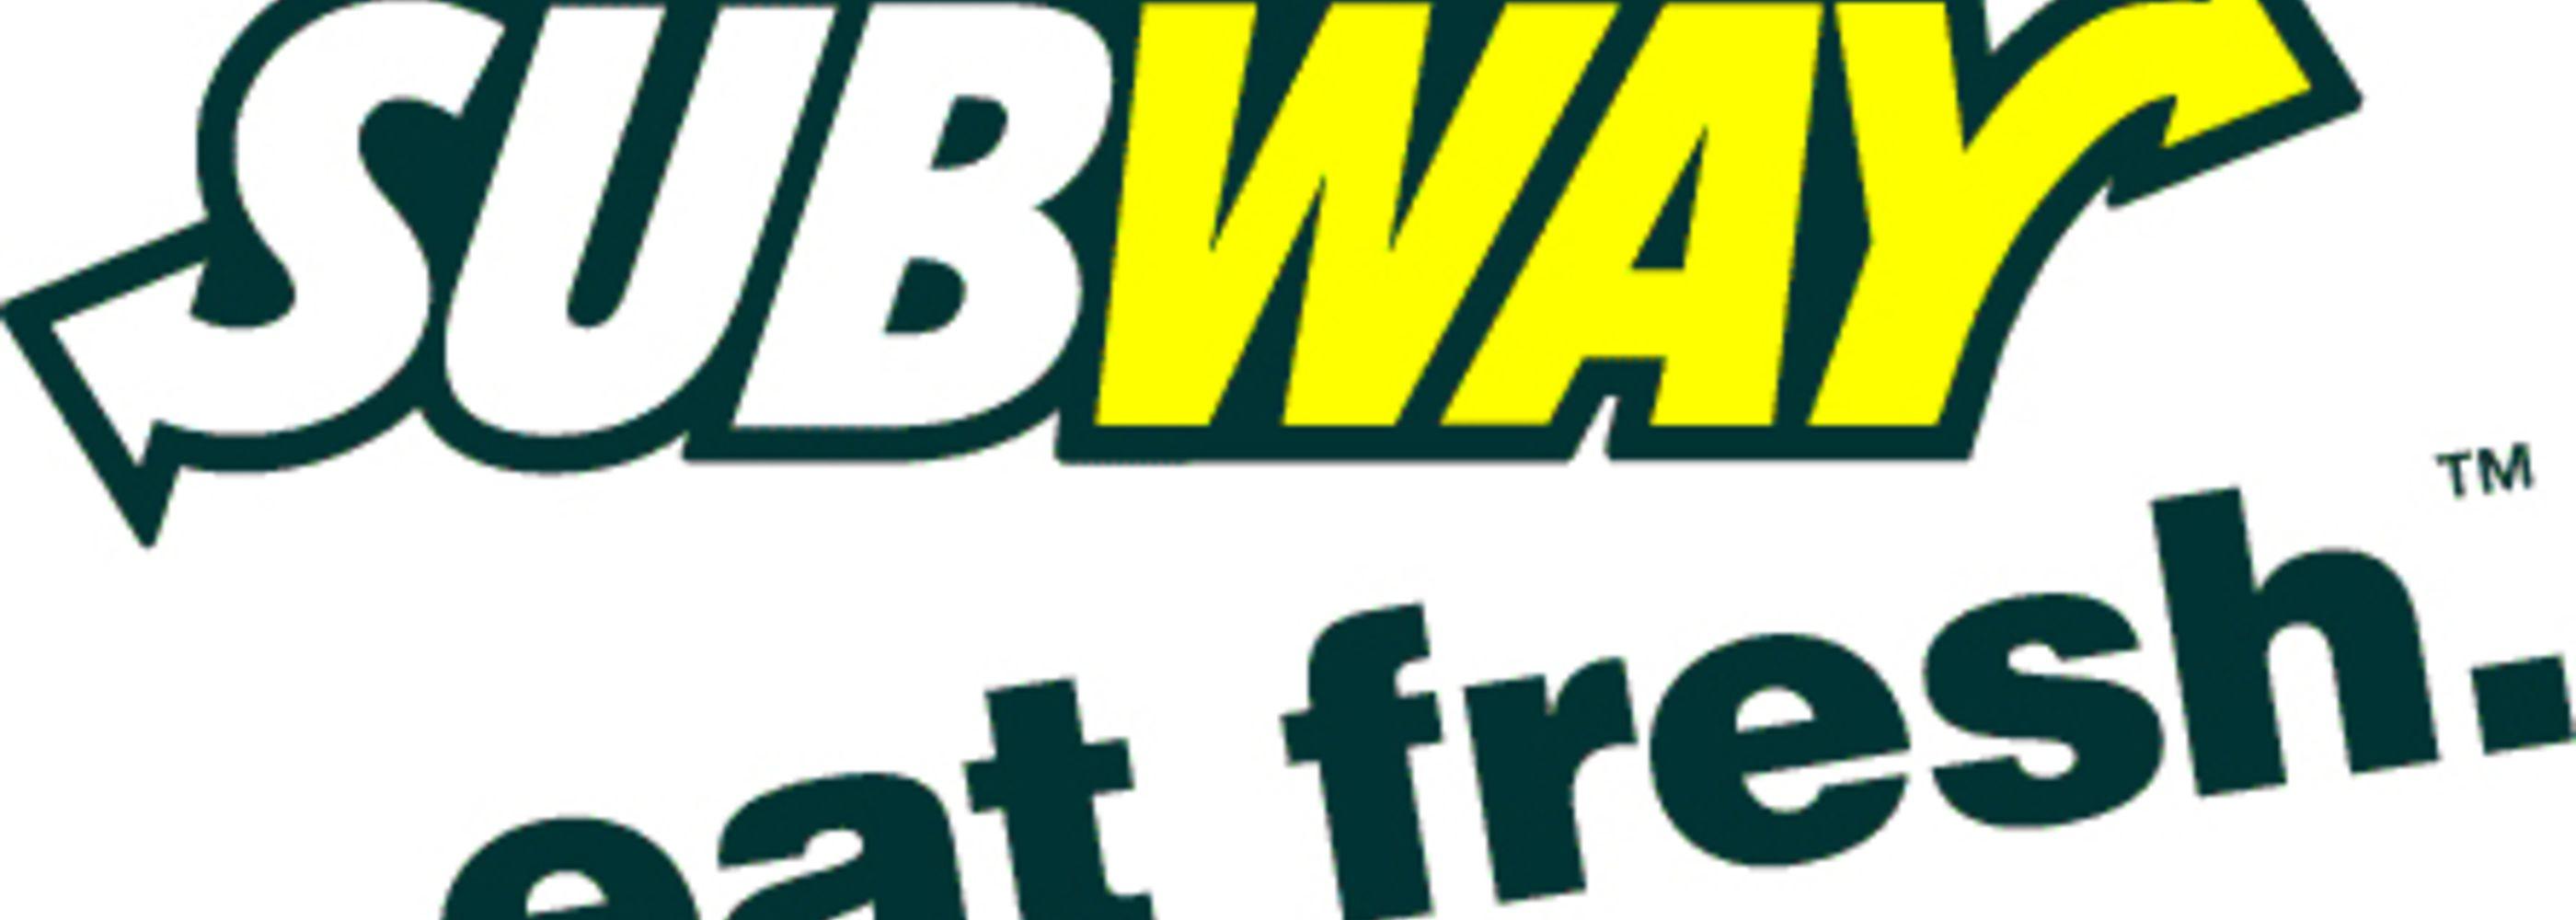 Subway Eat Fresh Logo - Widgety